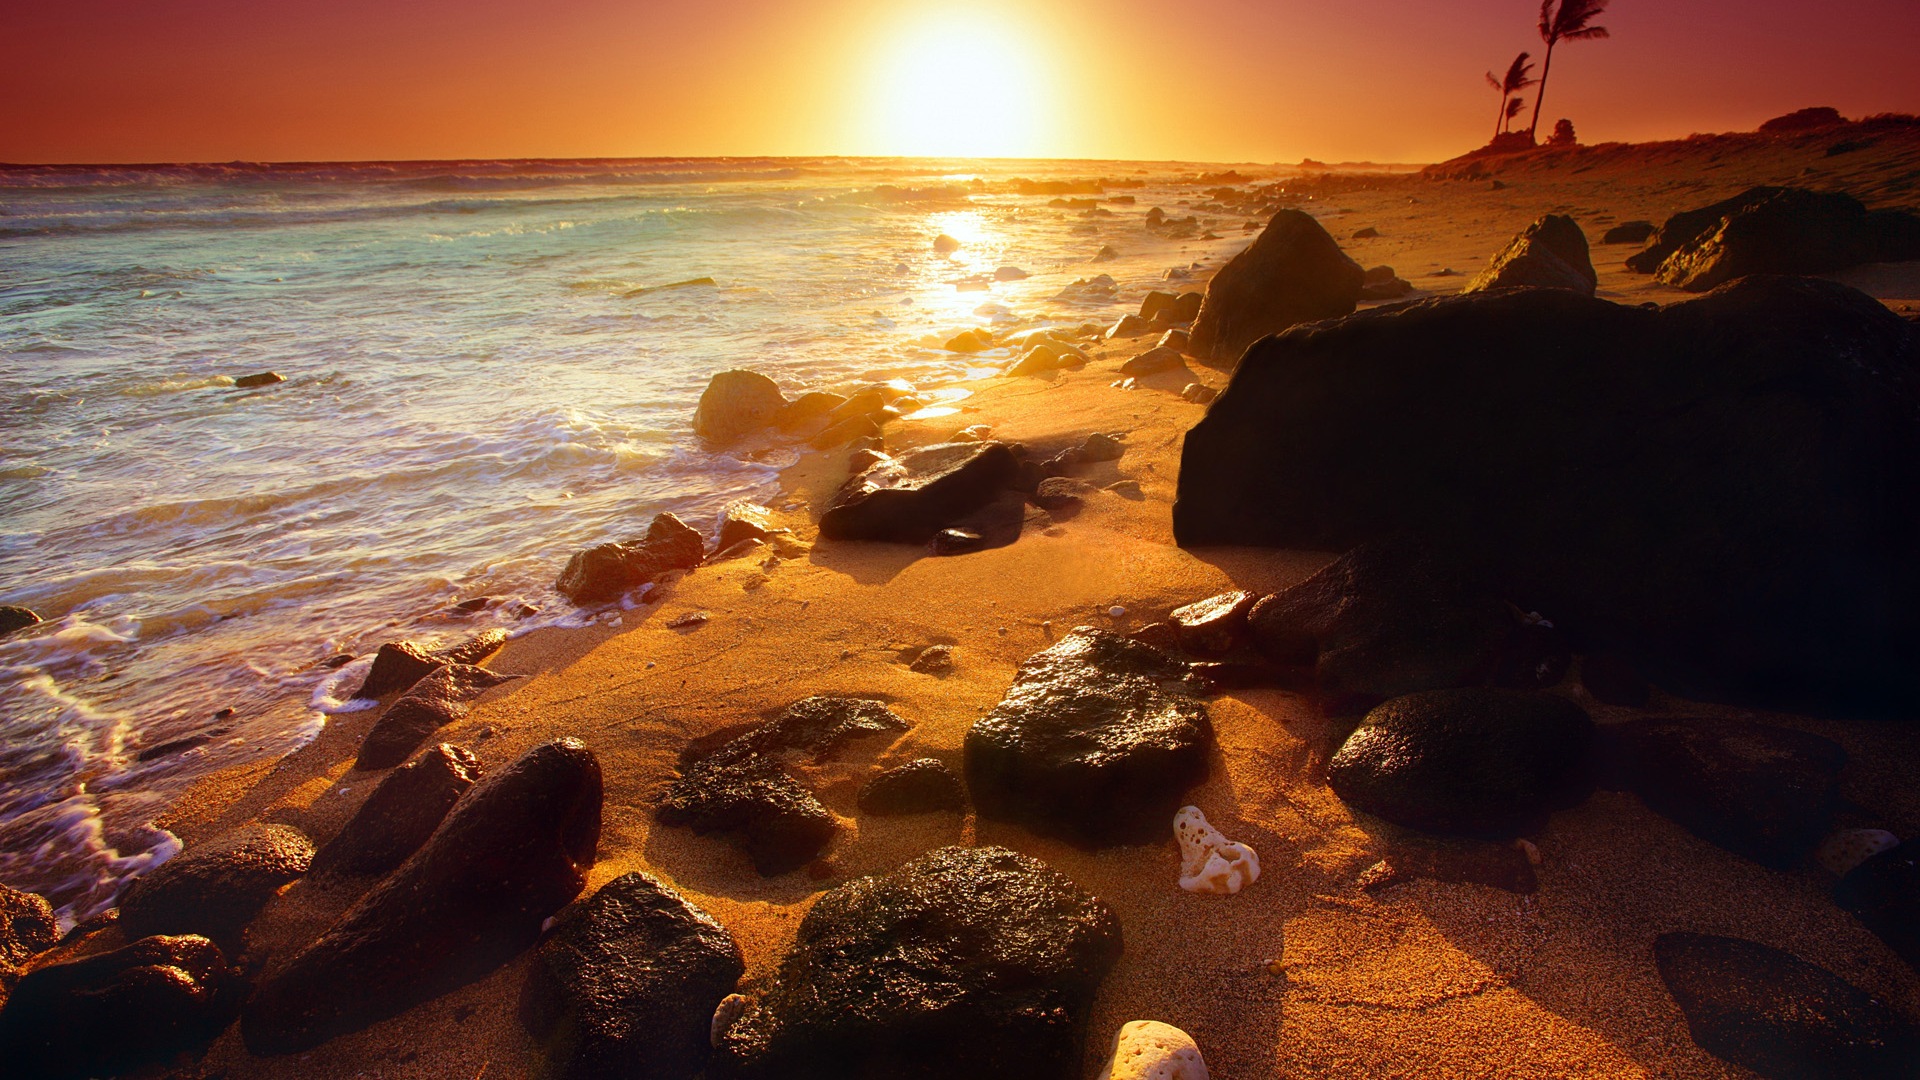 Windows 8 theme wallpaper: Beach sunrise and sunset views #1 - 1920x1080